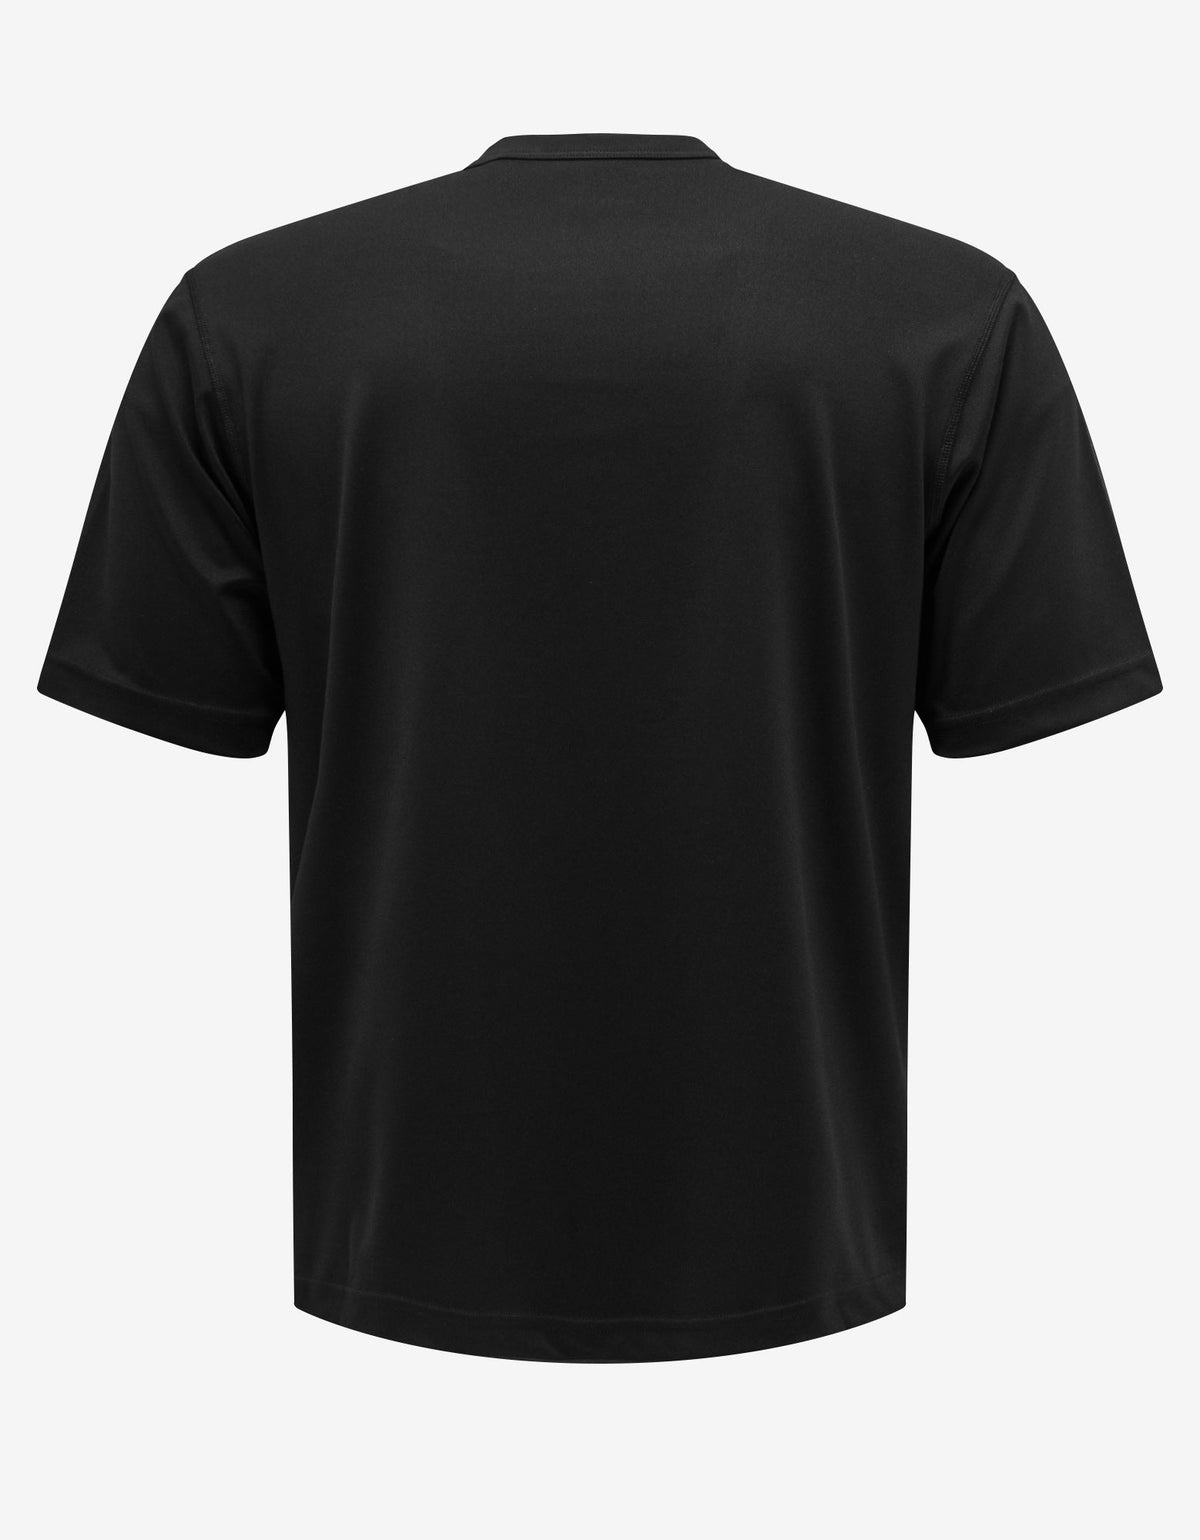 Jil Sander Plus Black Logo T-Shirt